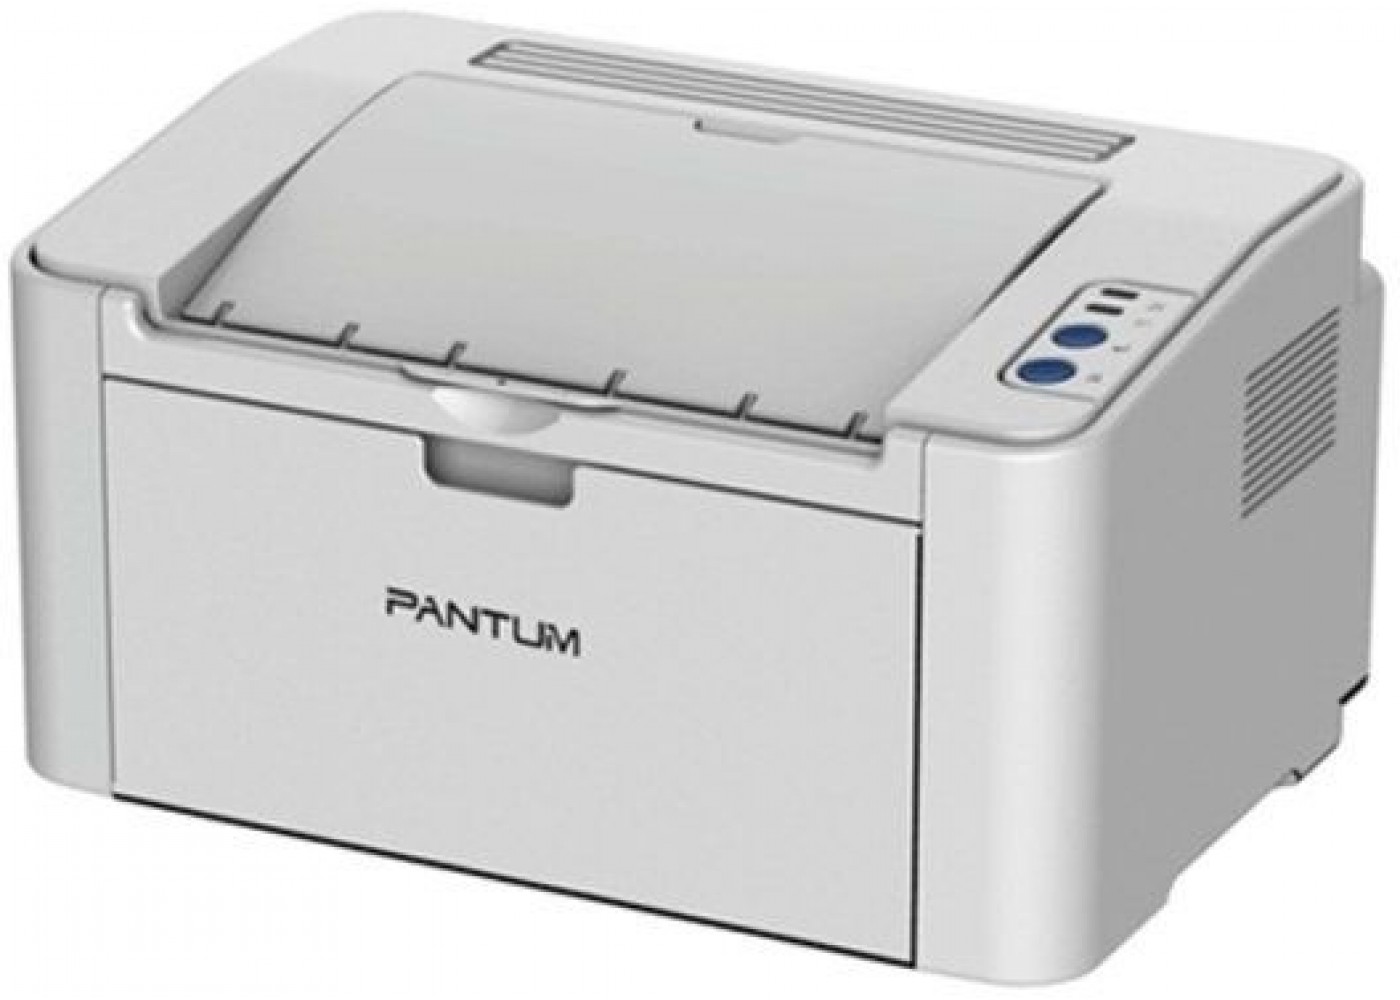 Принтер pantum p2200 series. Принтер лазерный Pantum p2200. Принтер лазерный Pantum p2200 a4. Принтер лазерный Pantum p2200 серый. Pantum принтер p2200 принтер.